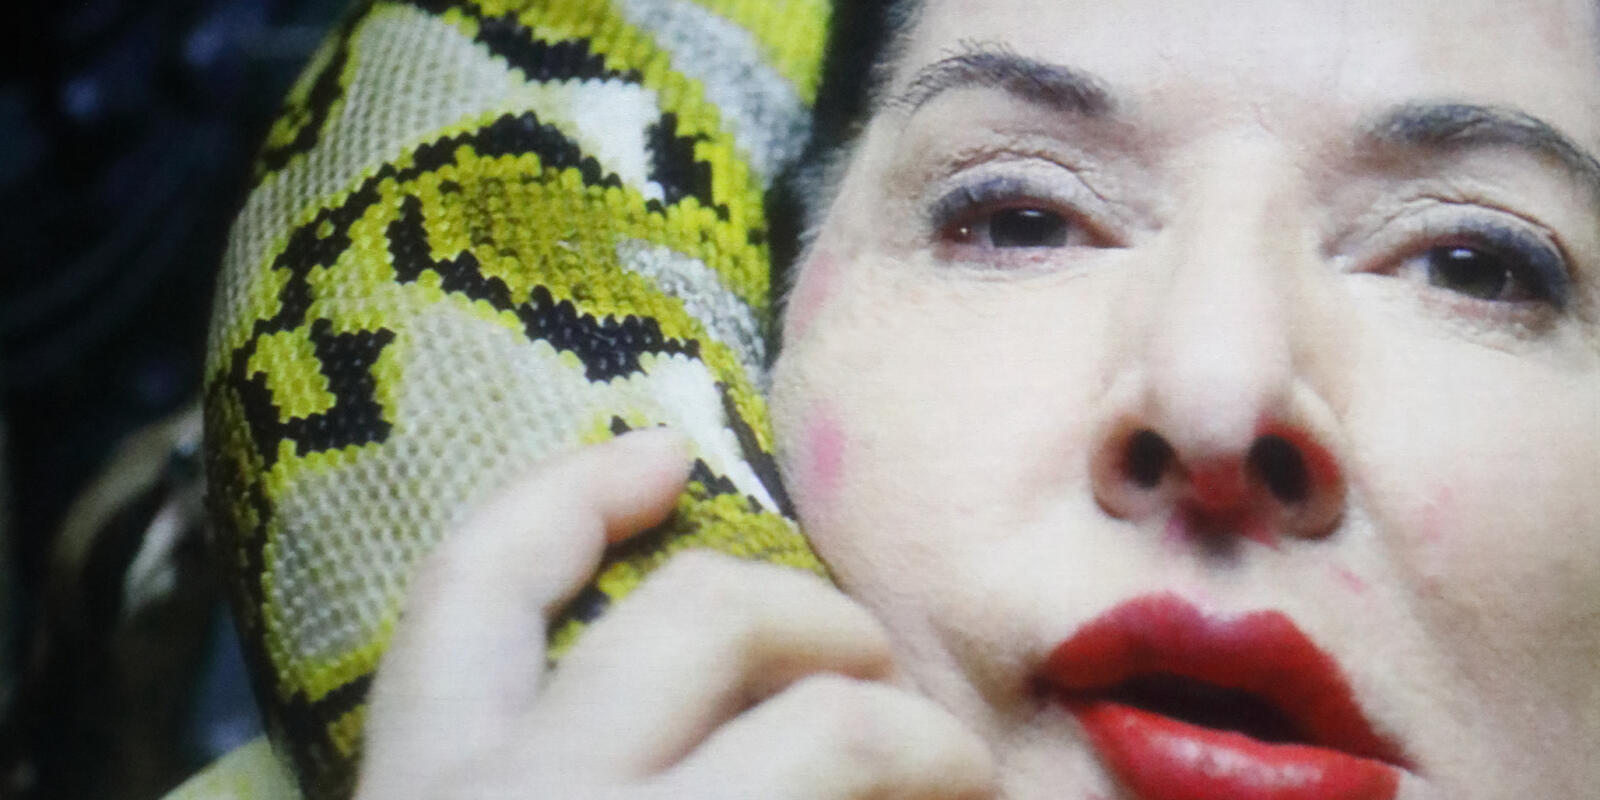 Production Image from 7 Deaths of Maria Callas by Marina Abramović. Bayerische Staatsoper © W. Hösl (Photos)